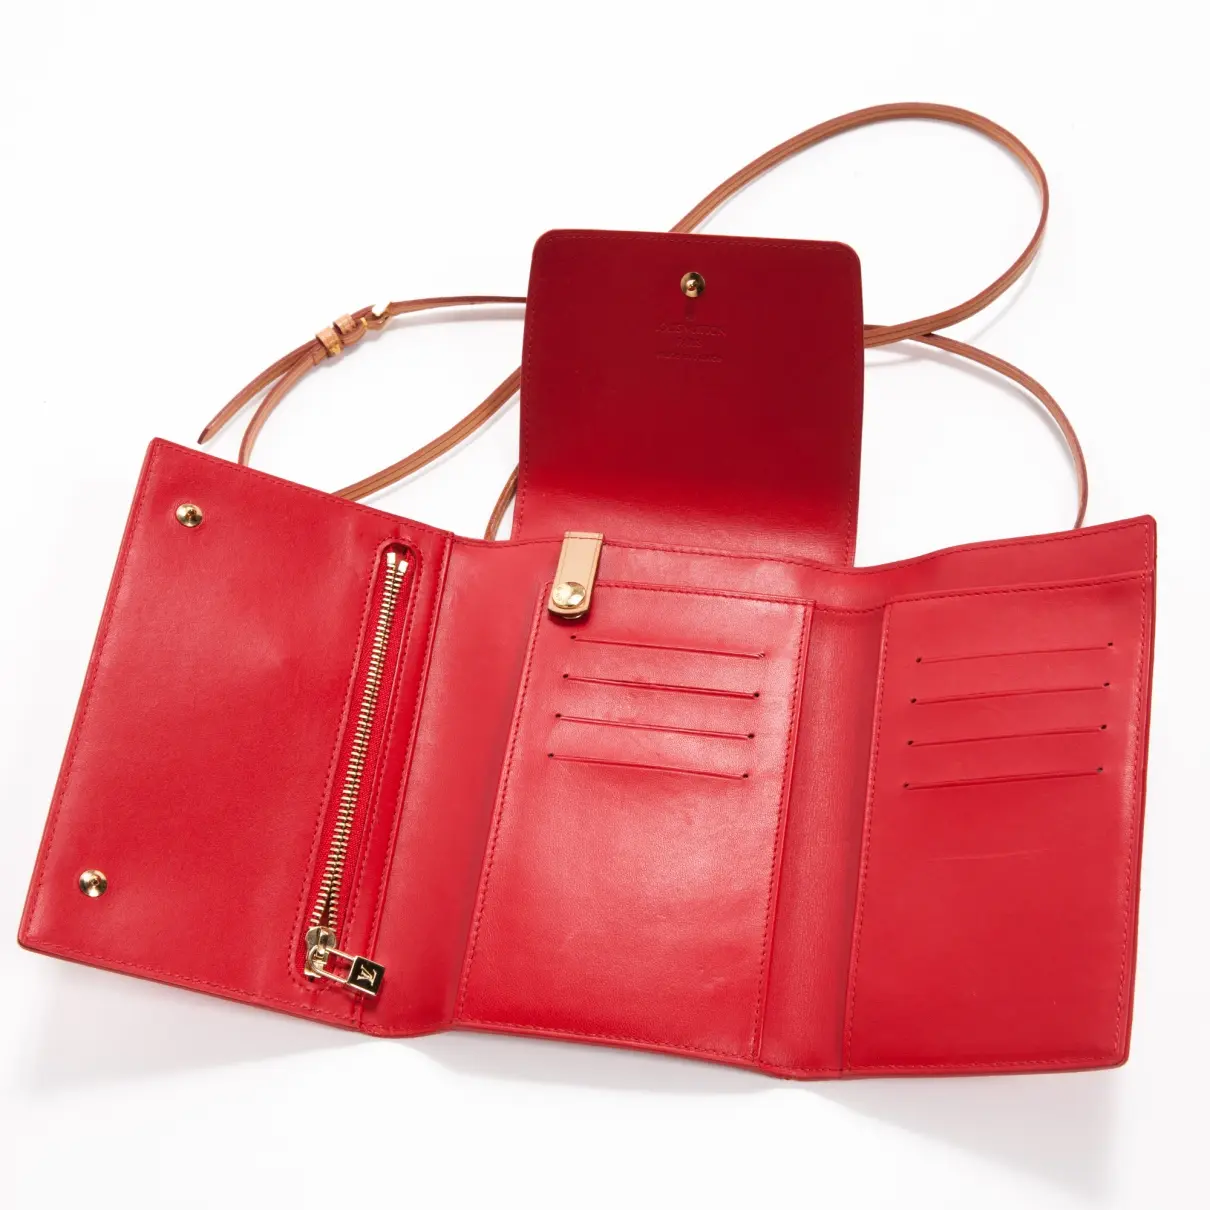 Buy Louis Vuitton Patent leather clutch online